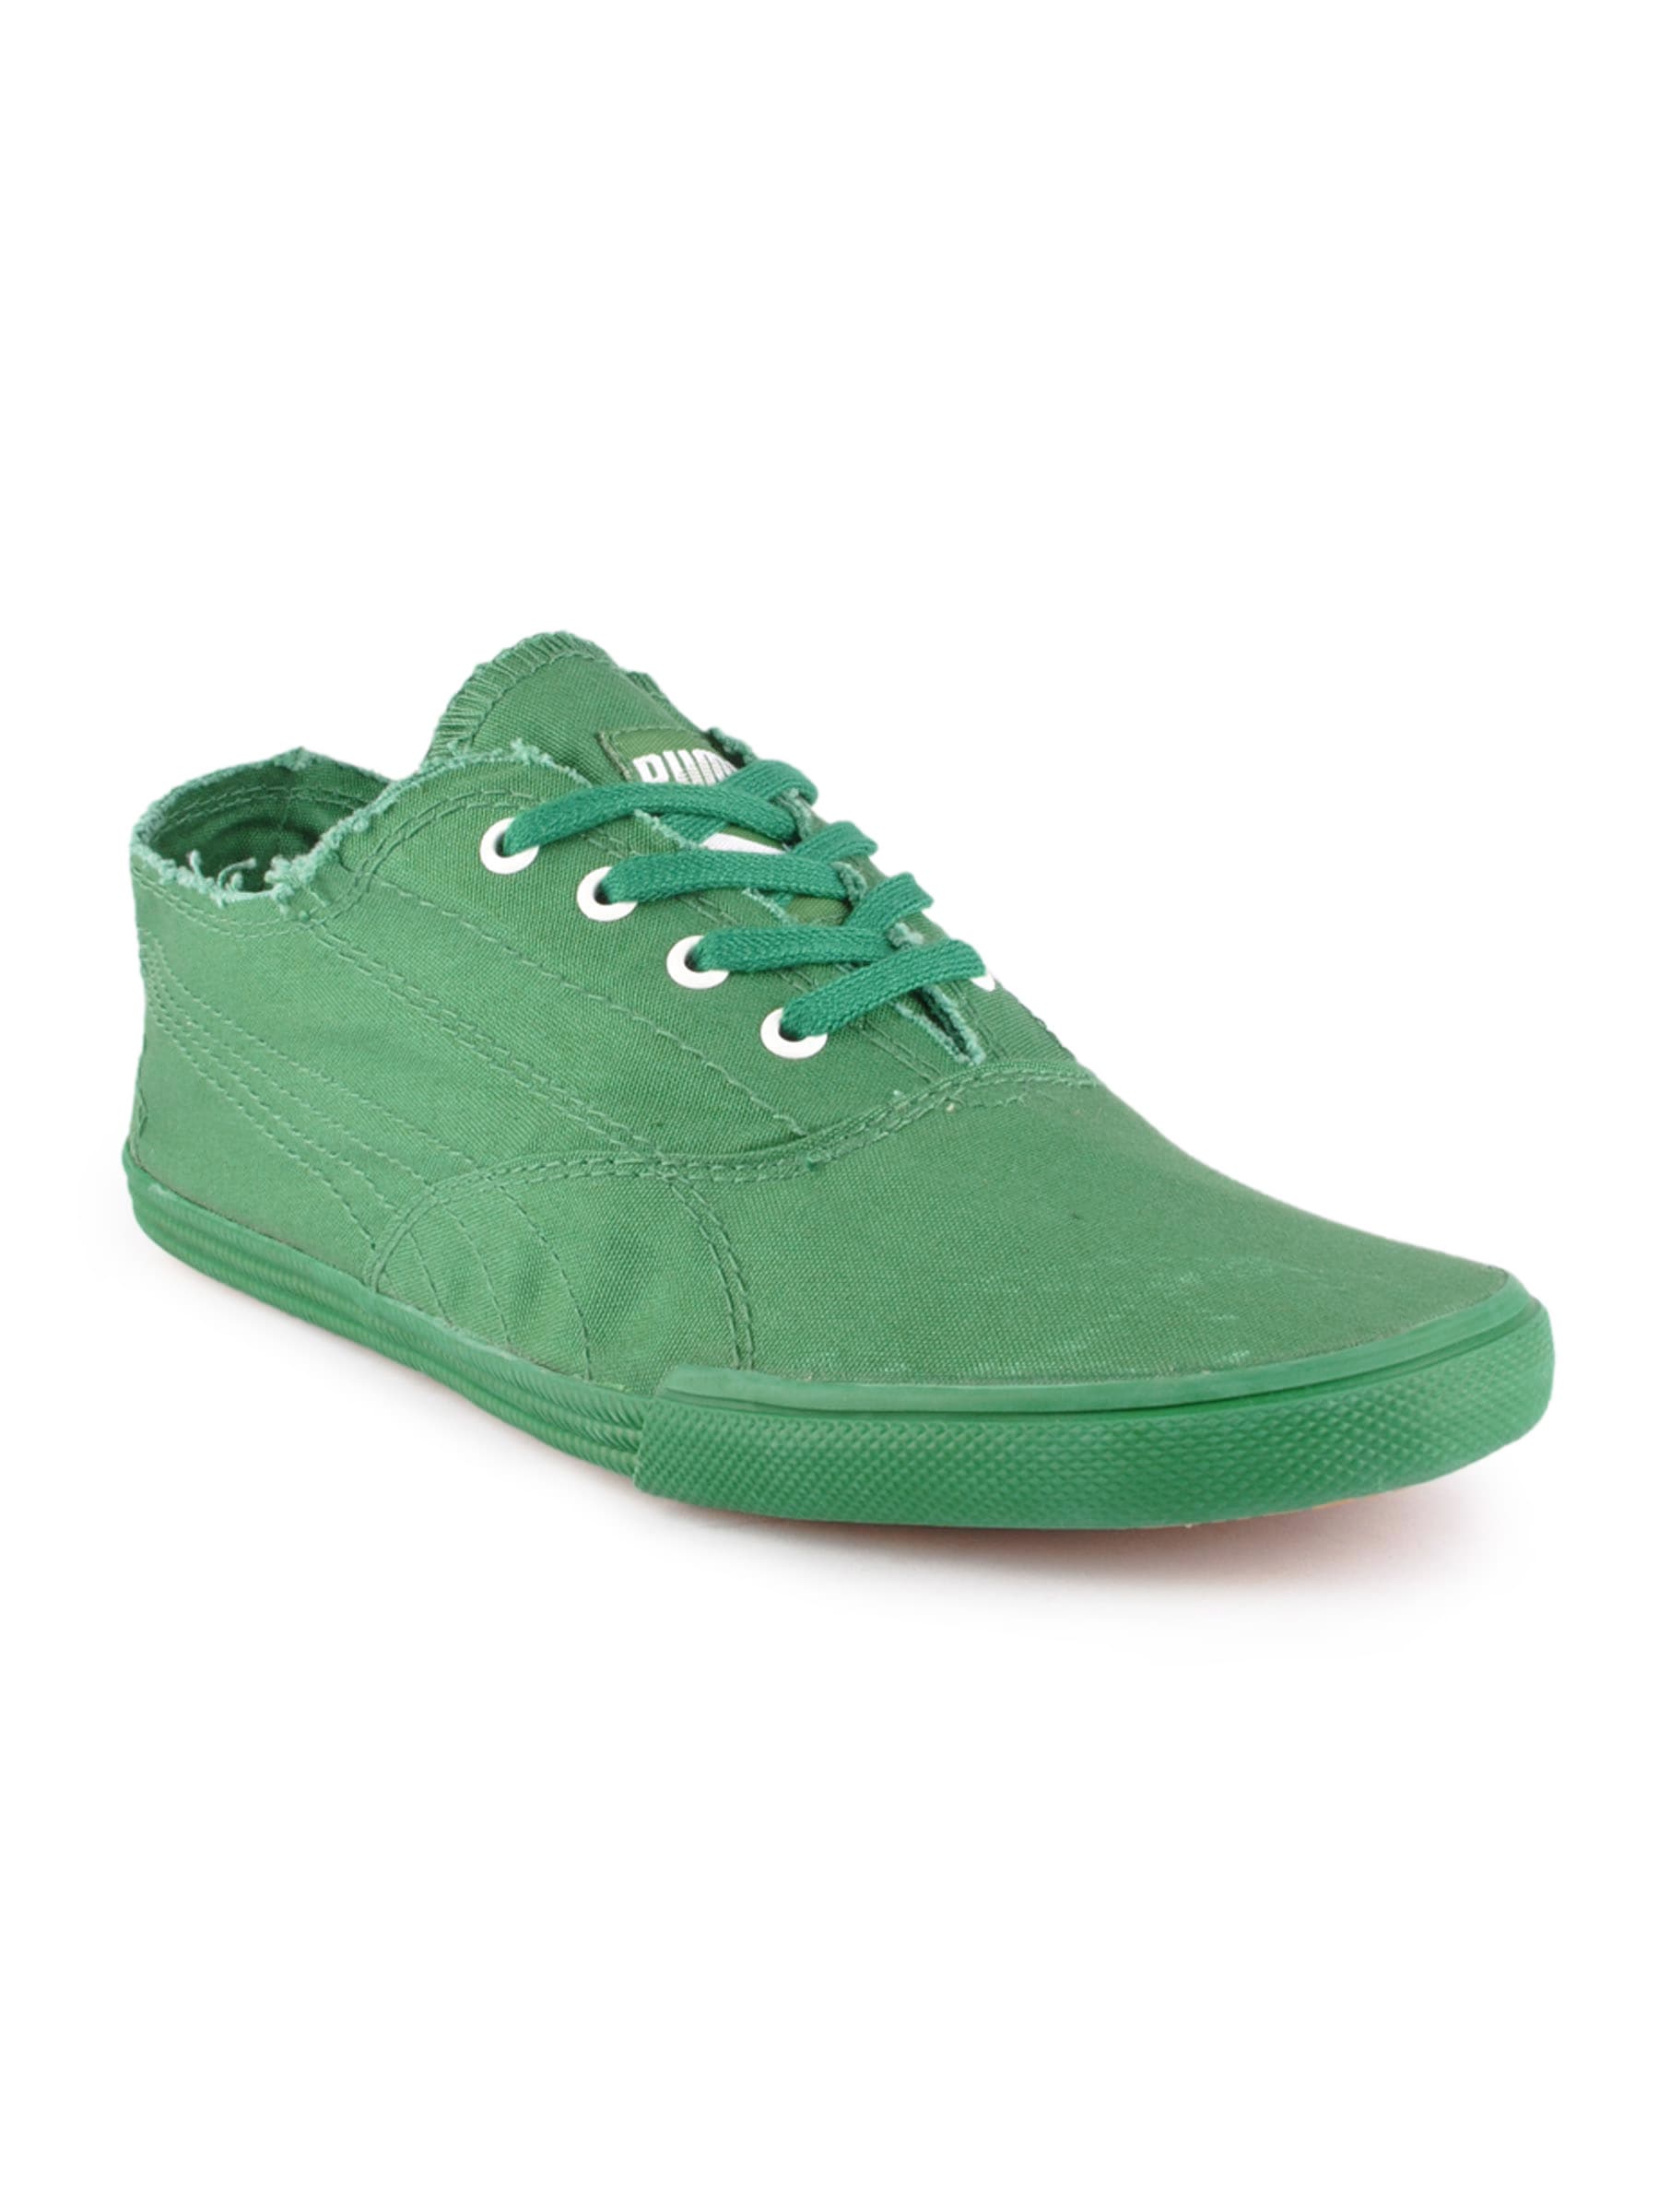 Puma Men Eco ortholite Green Casual Shoes